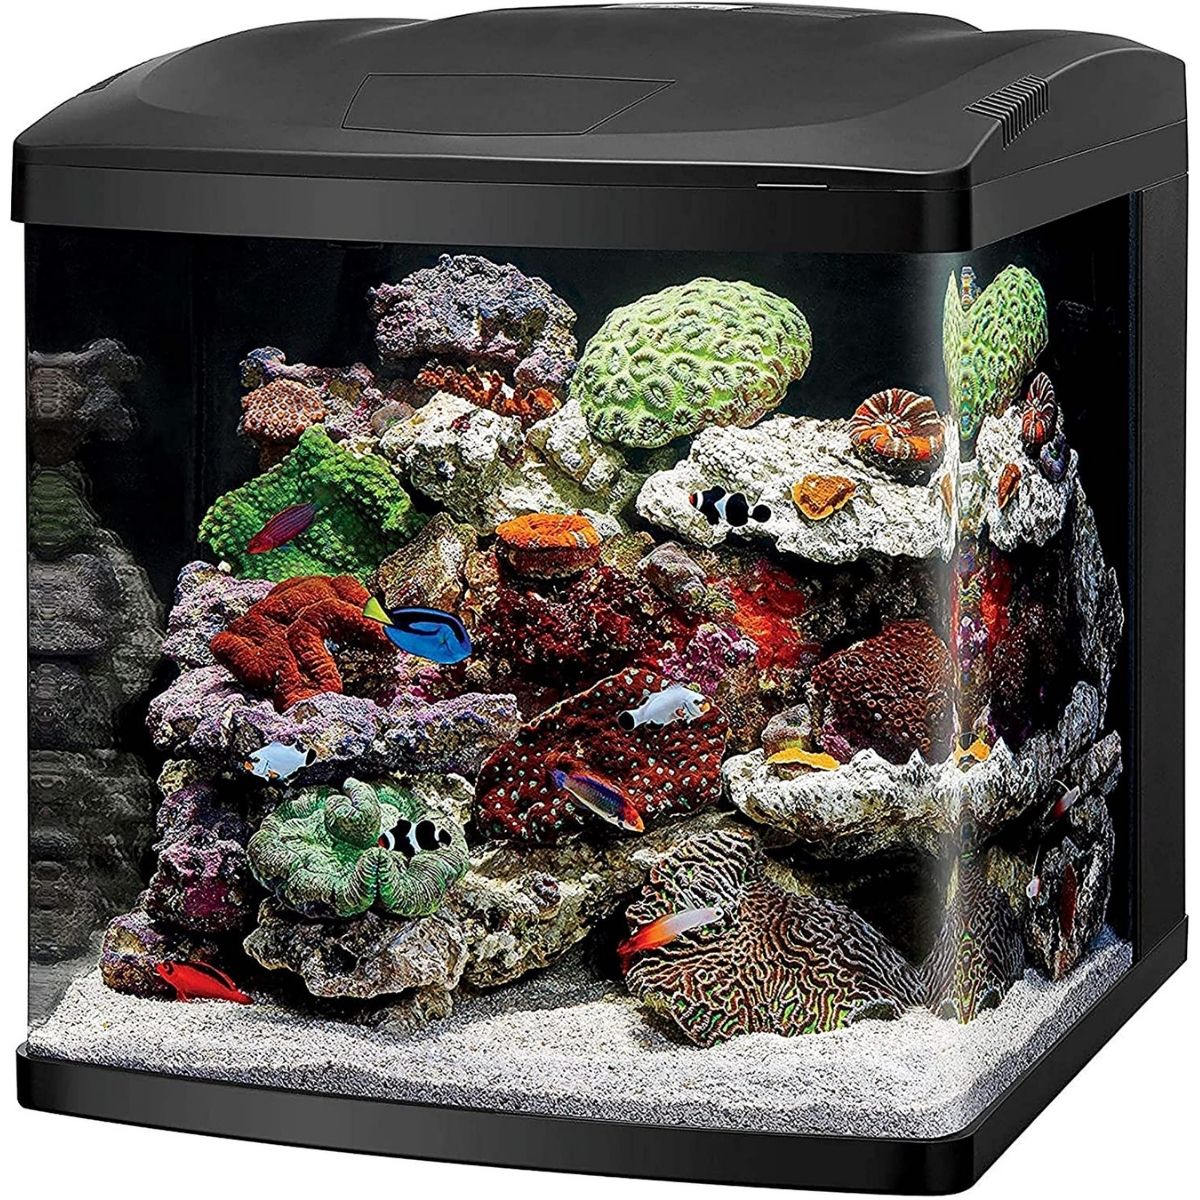 The Best Fish Tanks Option: Coralife Led Biocube